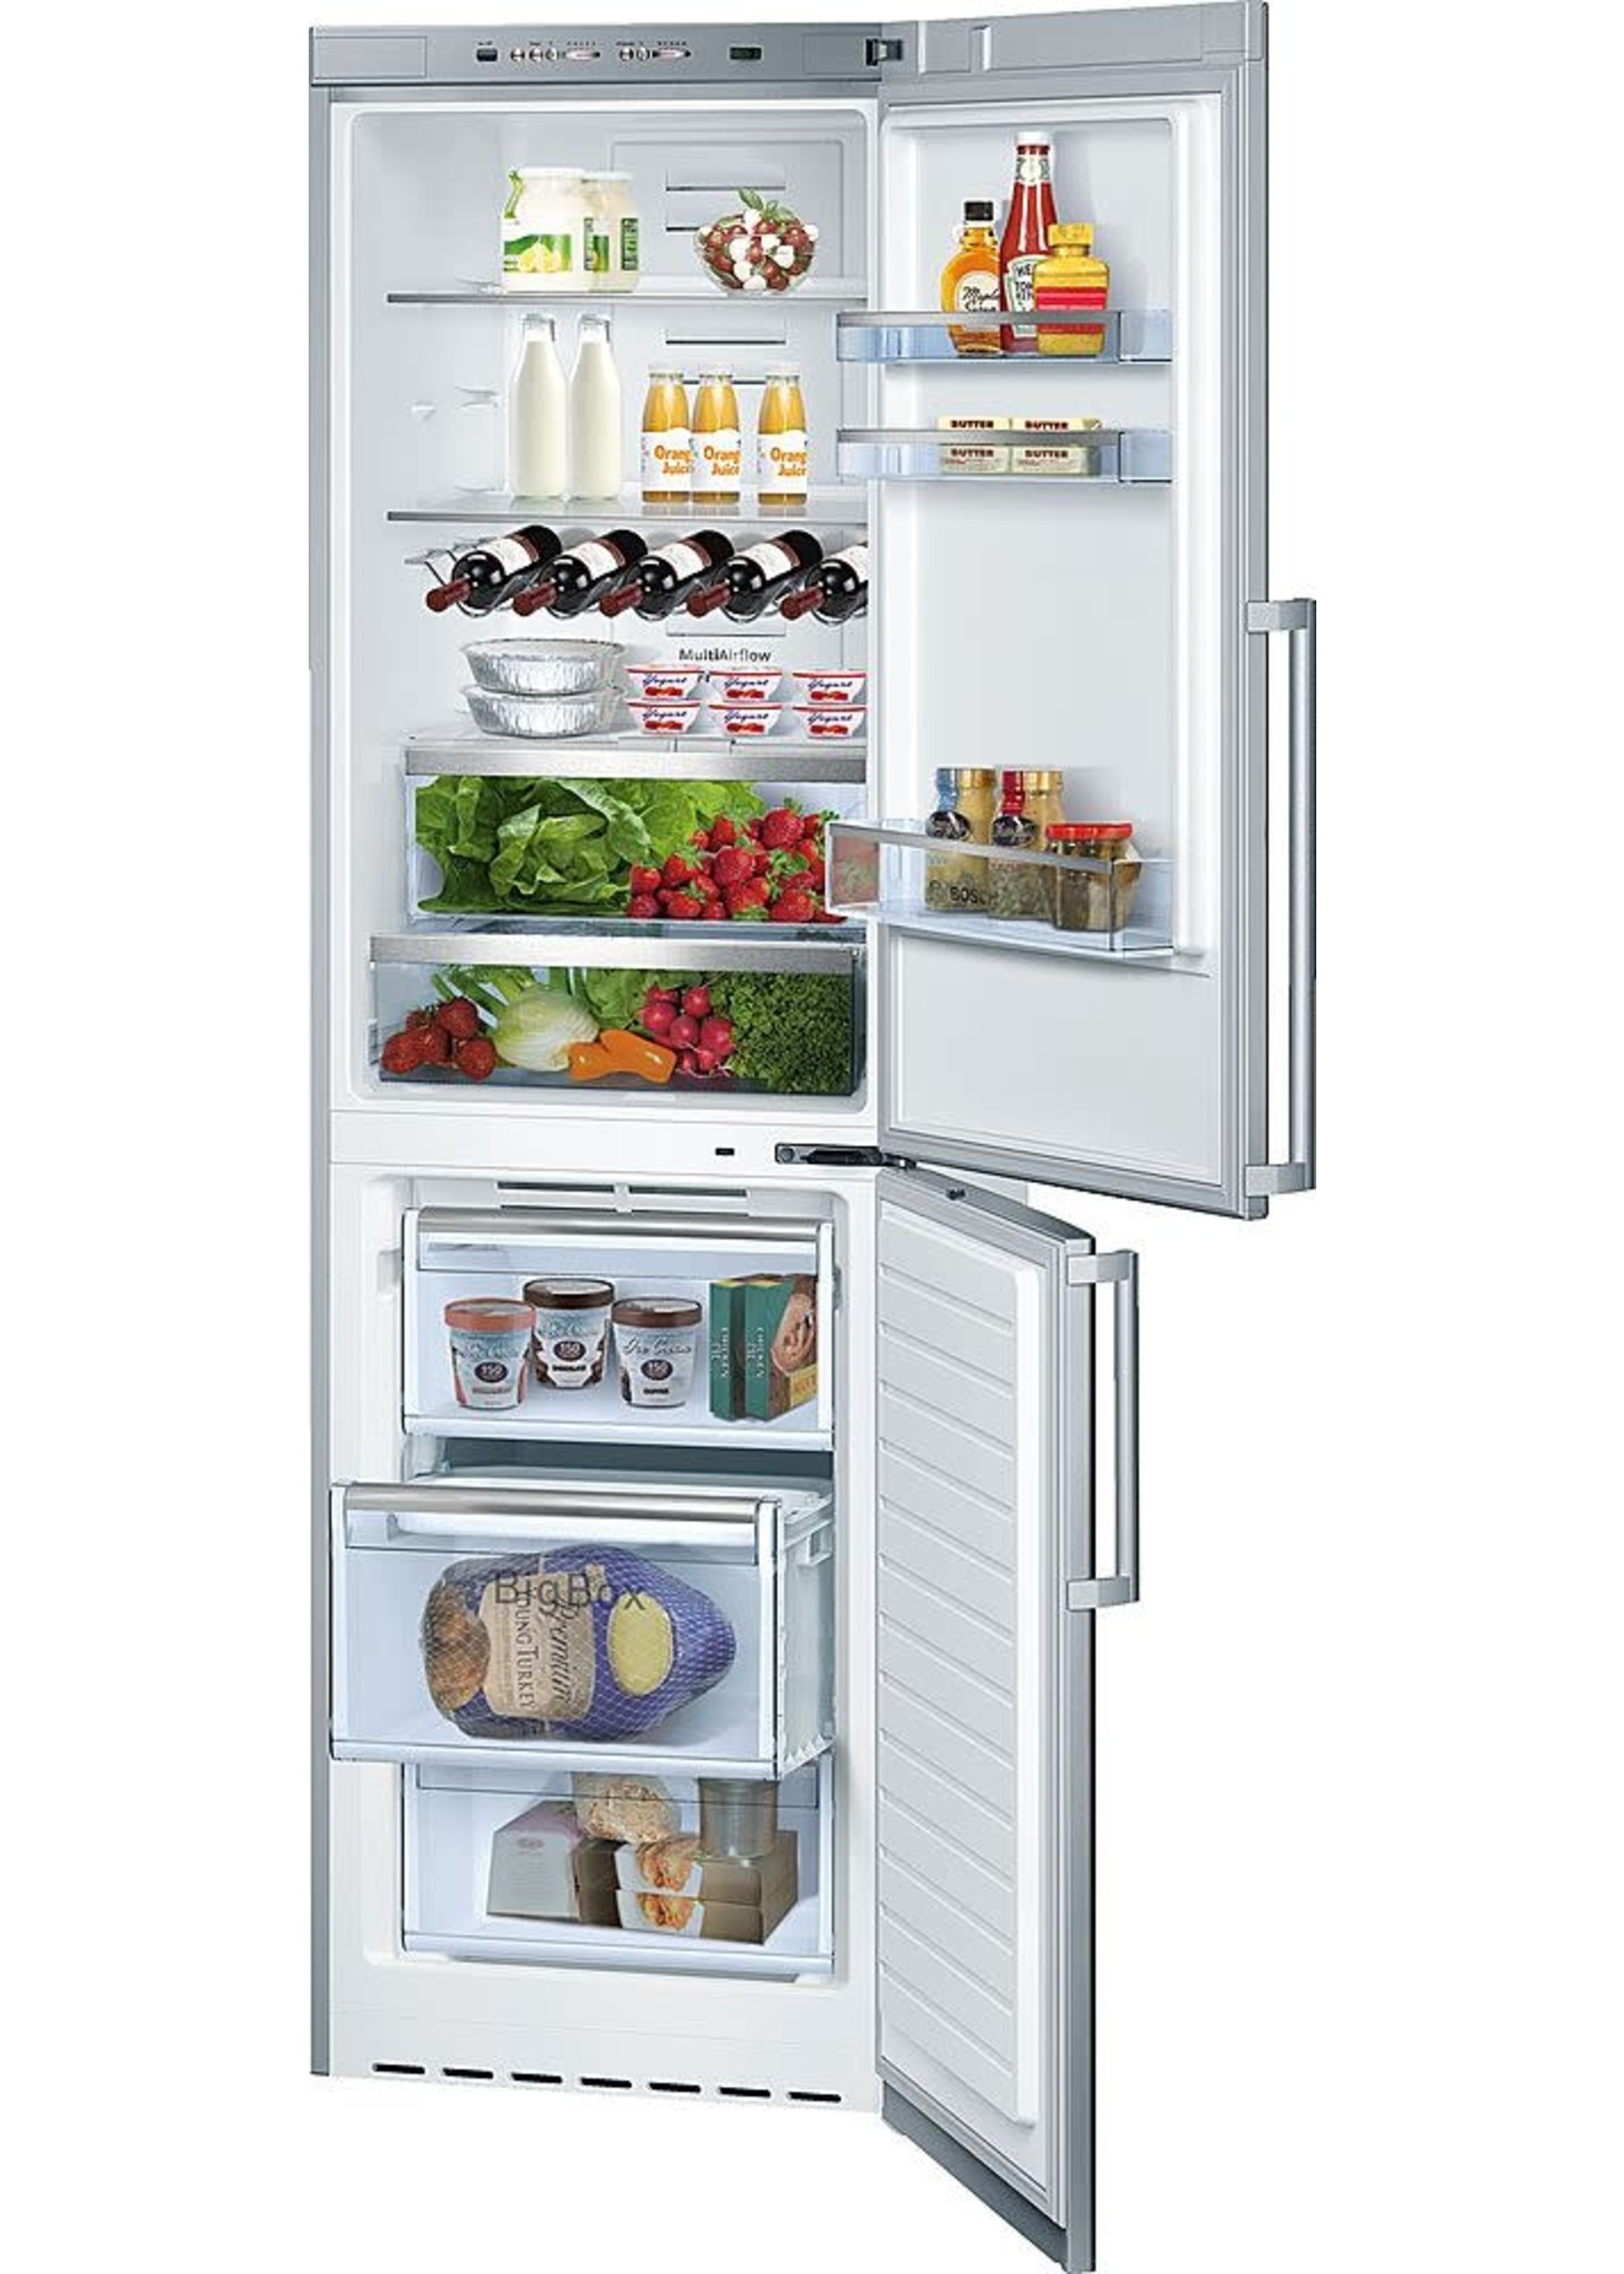 Bosch - 500 Series 11.0 Cu. Ft. Bottom-Freezer Counter-Depth Refrigerator - Stainless steel